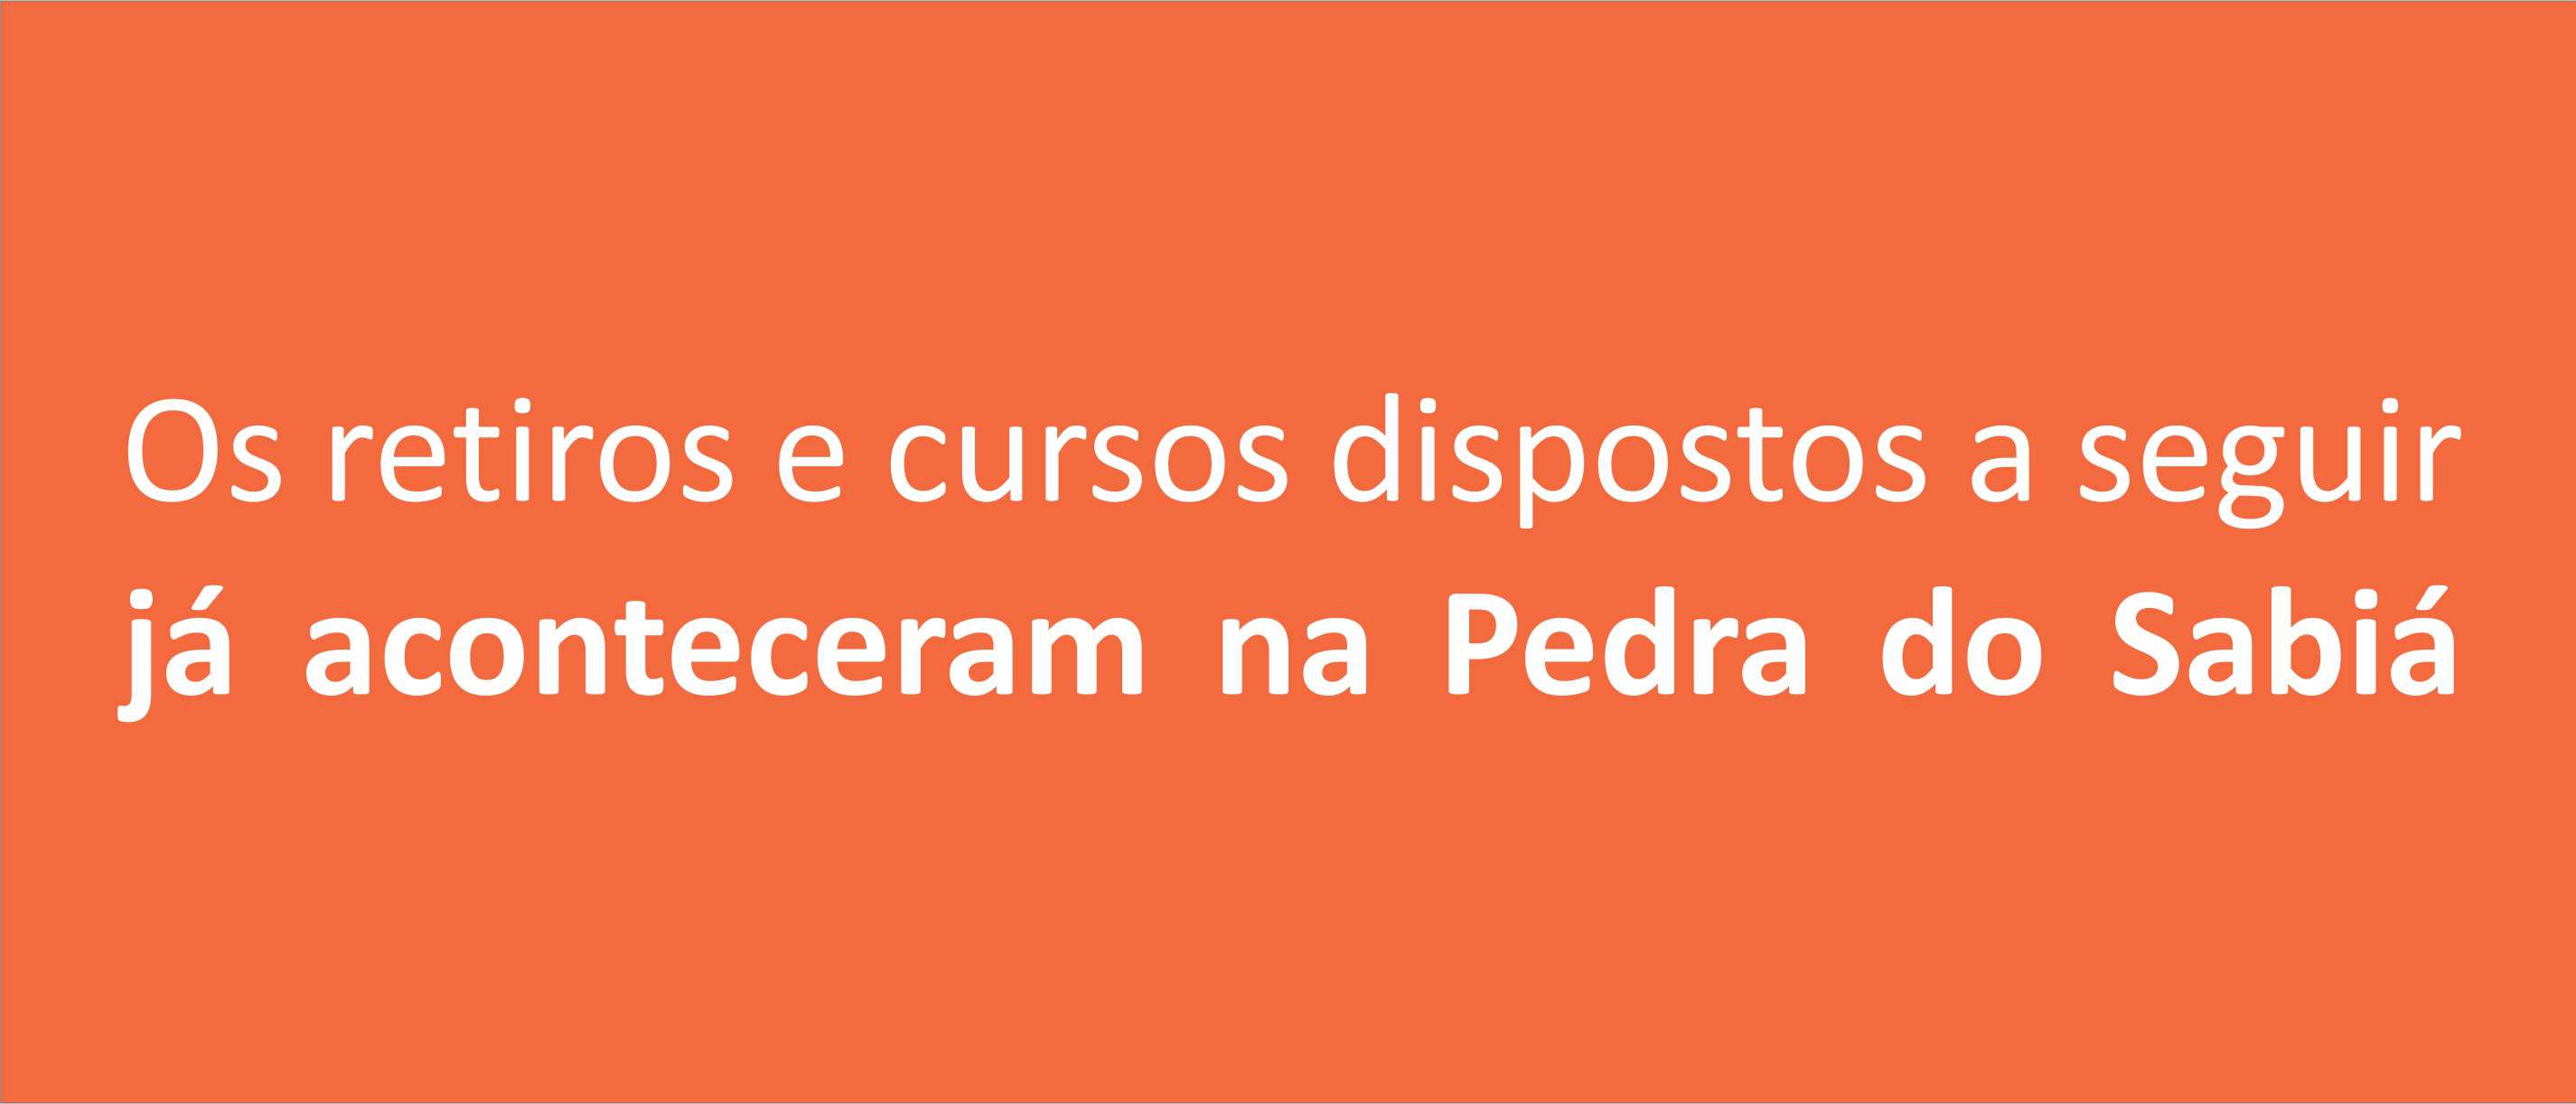 (Português) historico